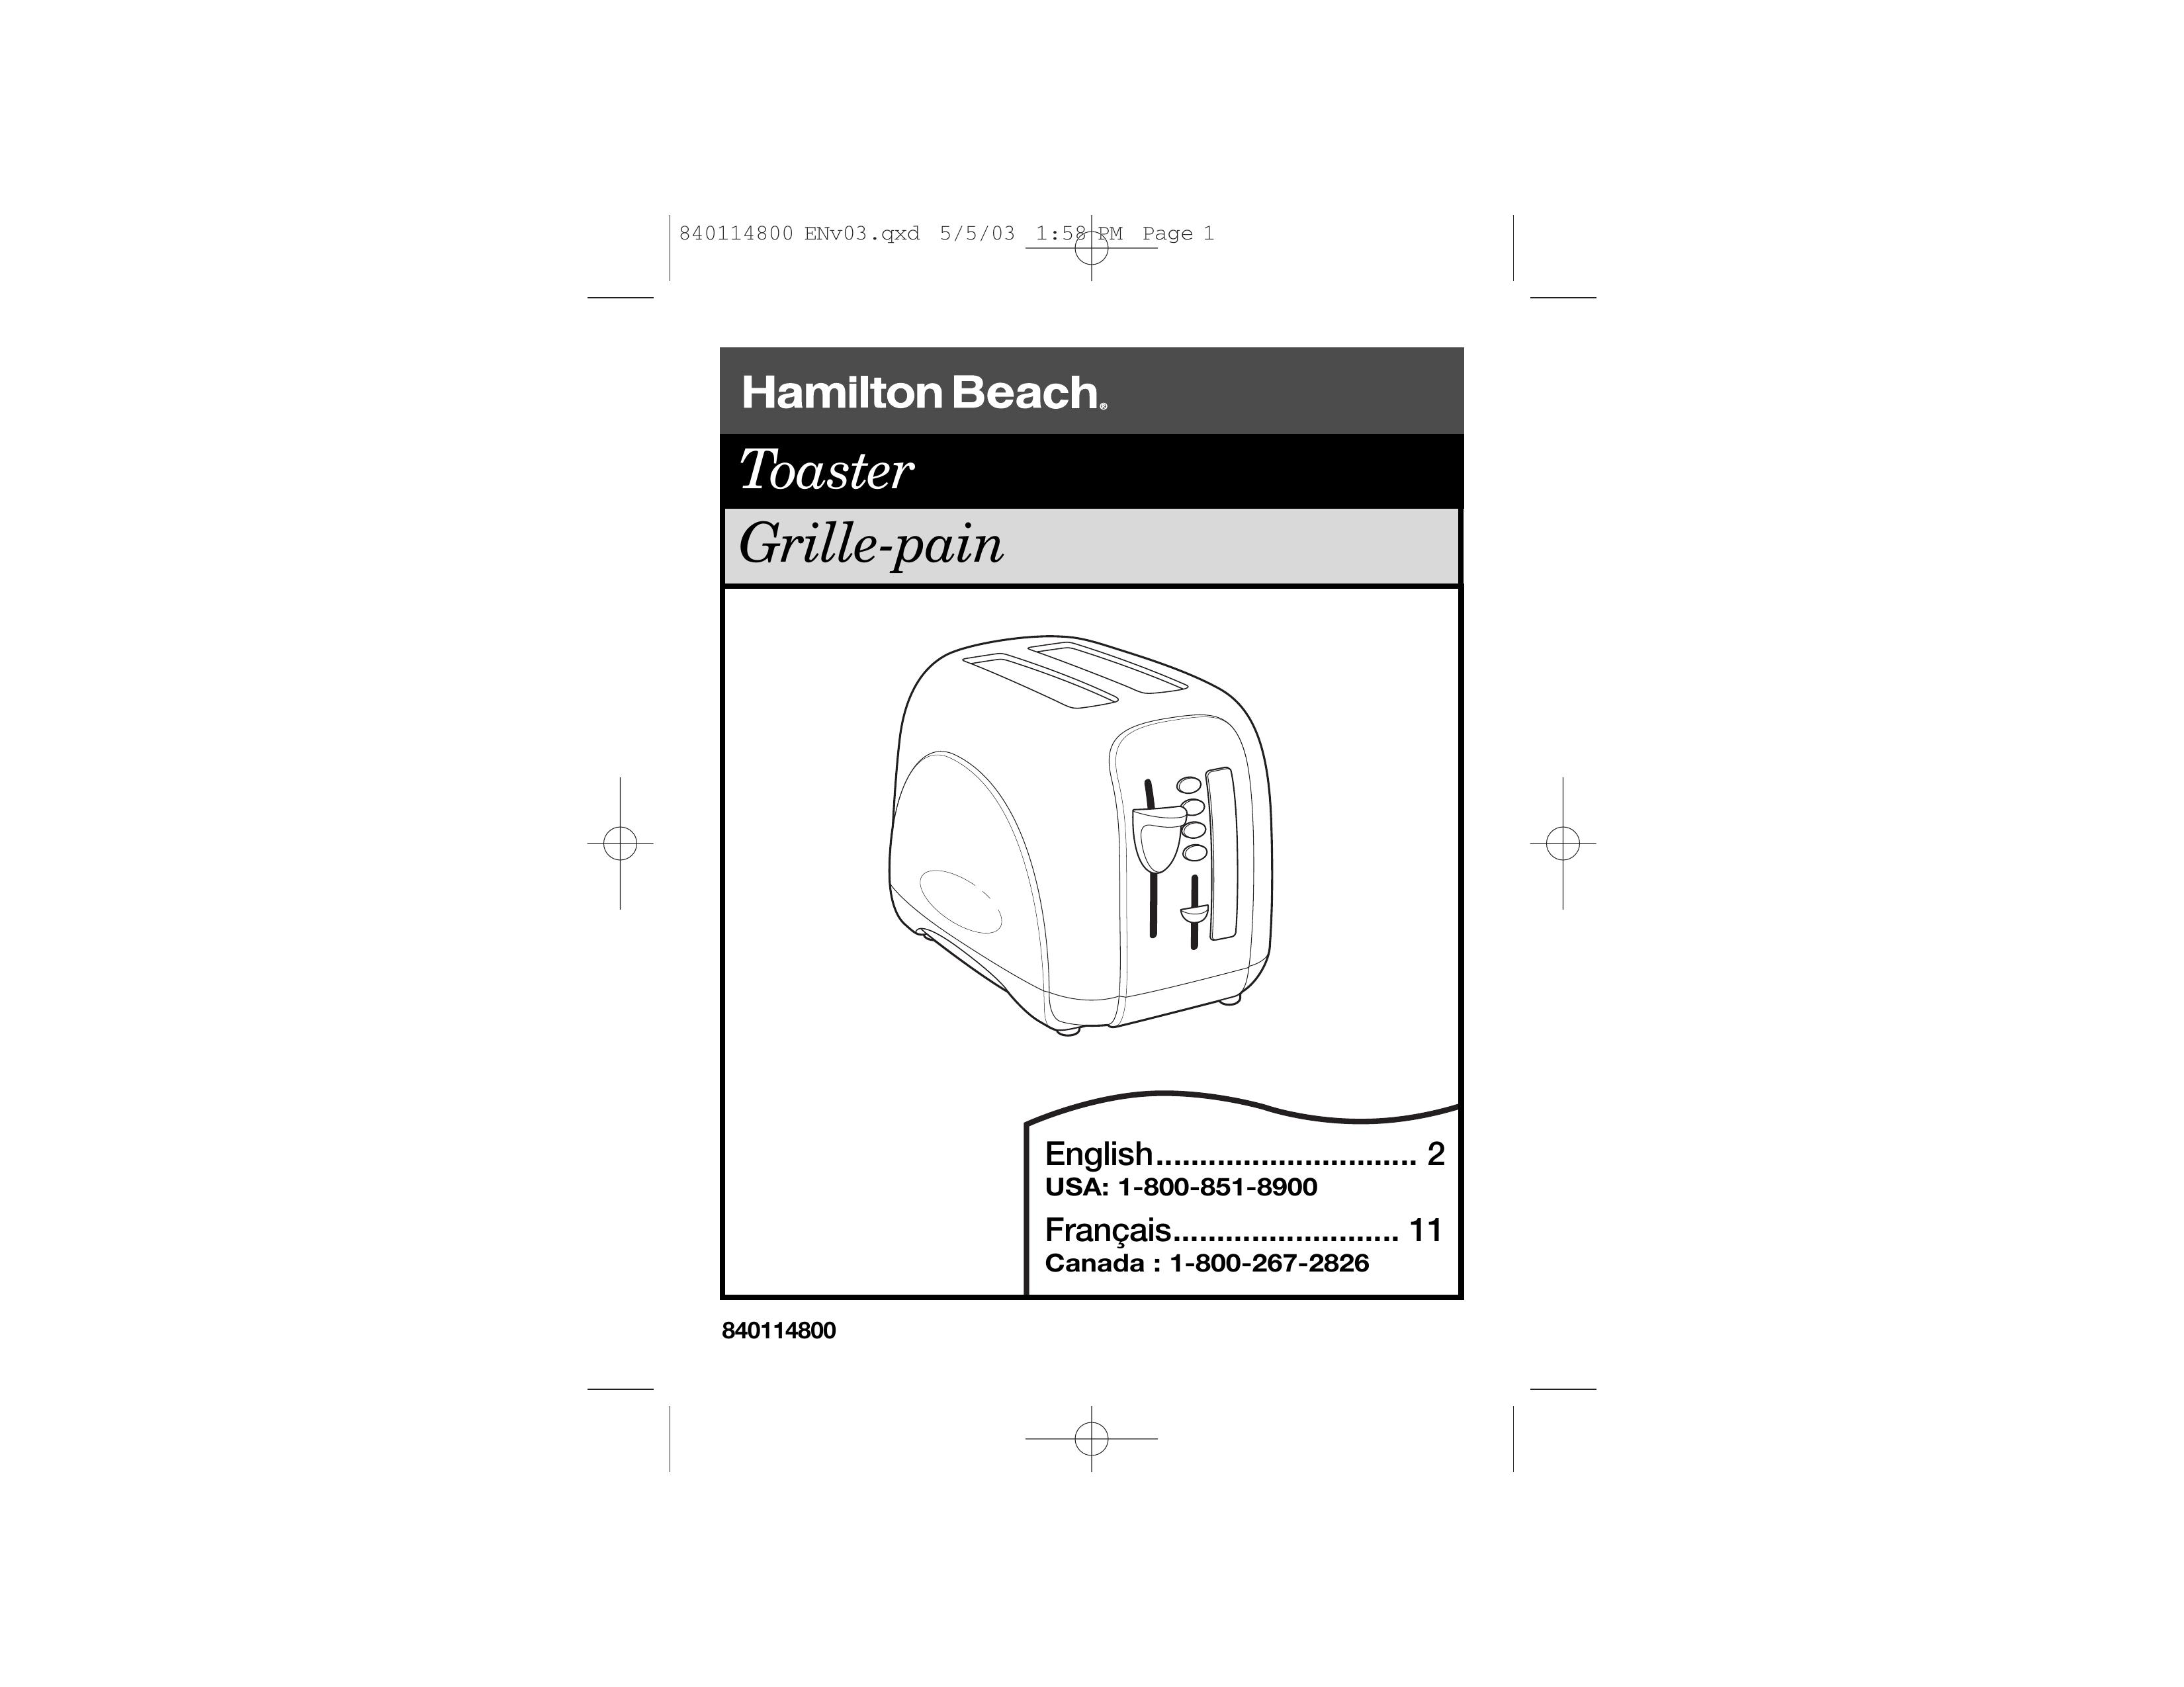 Hamilton Beach 24669 Toaster User Manual